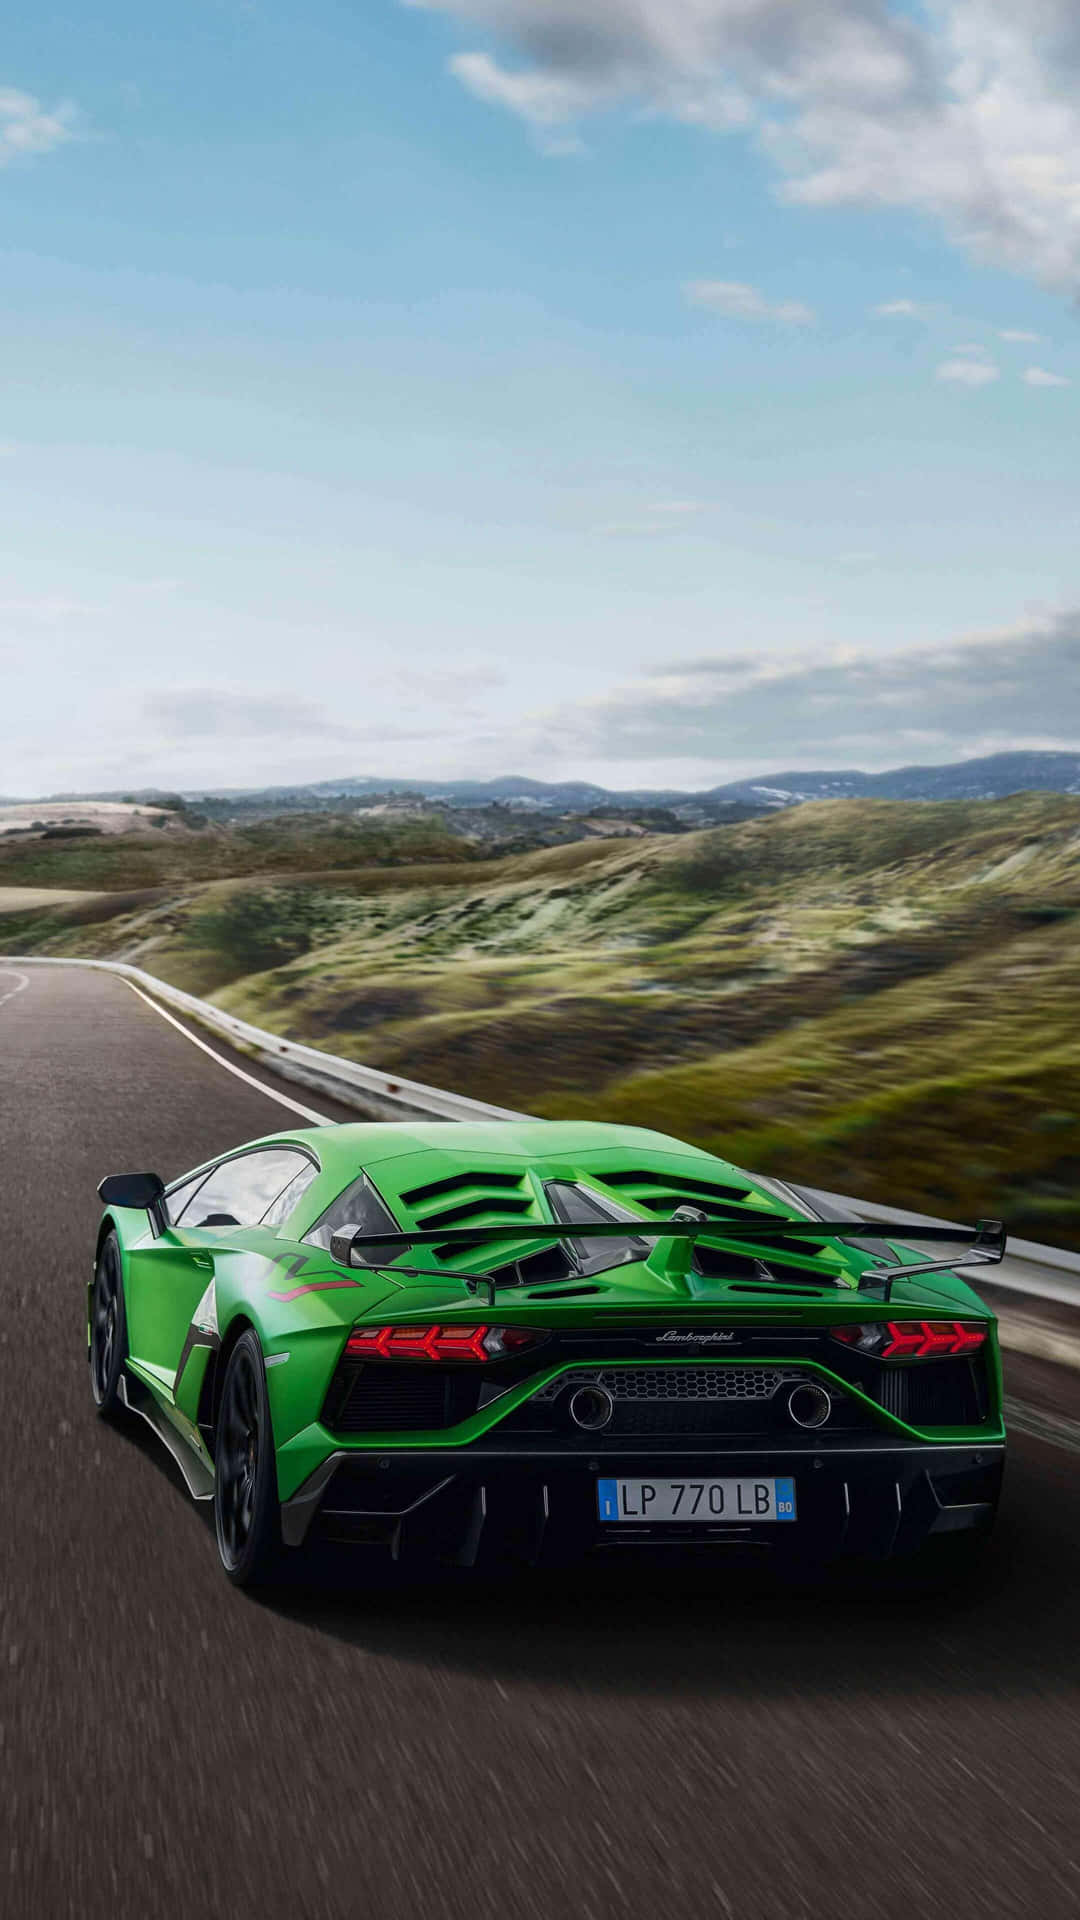 The Green Lamborghini Huracan Is Driving Down A Road Wallpaper